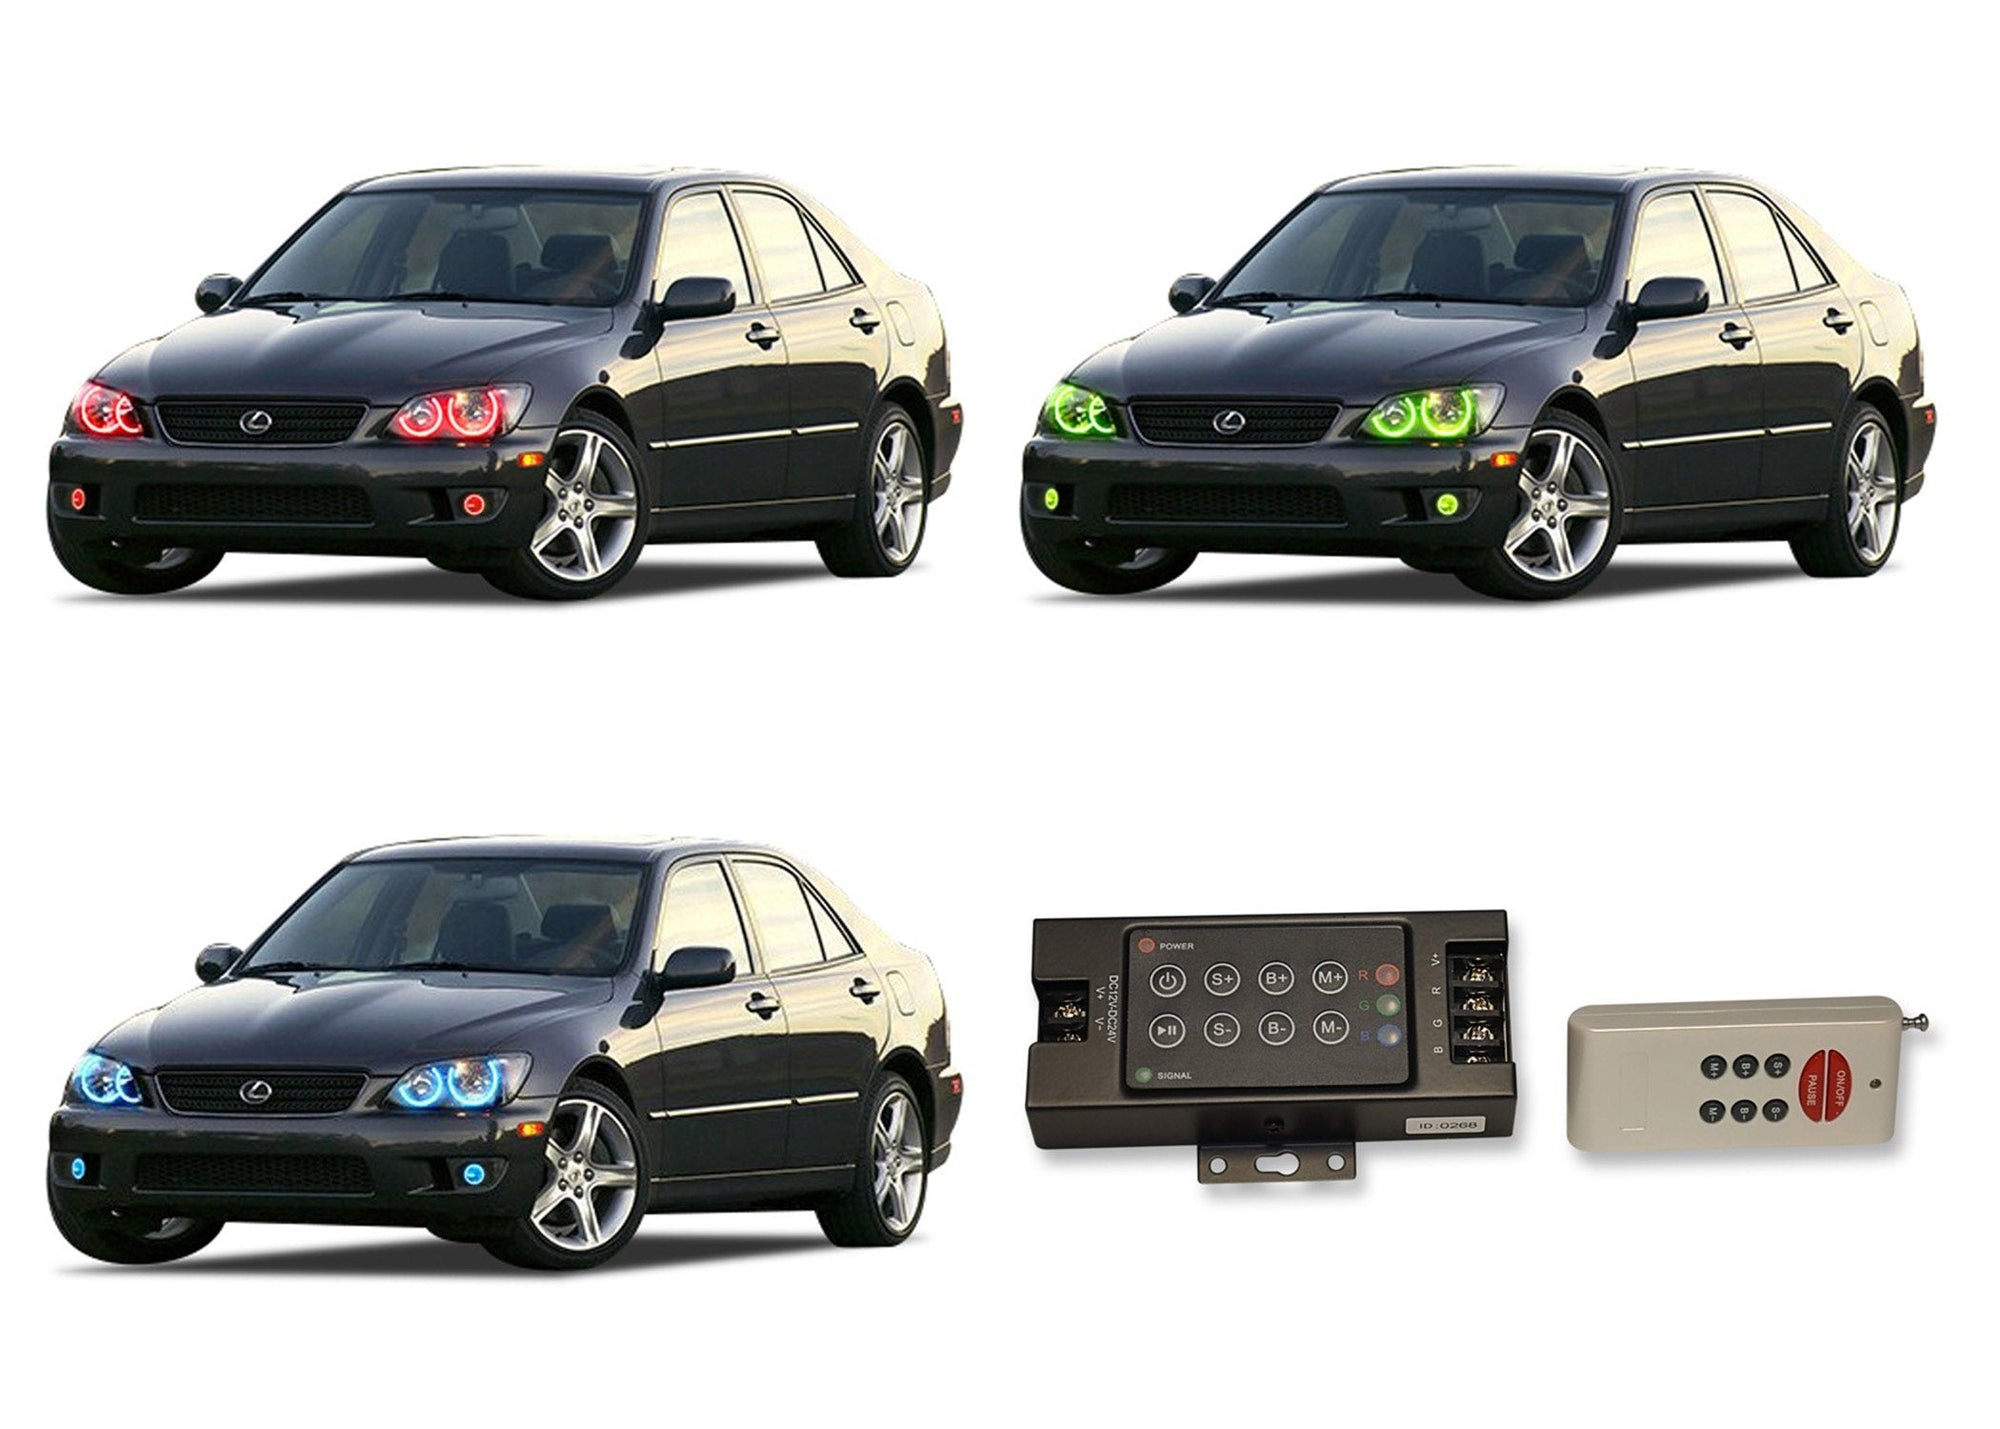 Lexus-is300-2001, 2002, 2003, 2004, 2005-LED-Halo-Headlights and Fog Lights-RGB-RF Remote-LX-IS30105-V3HFRF